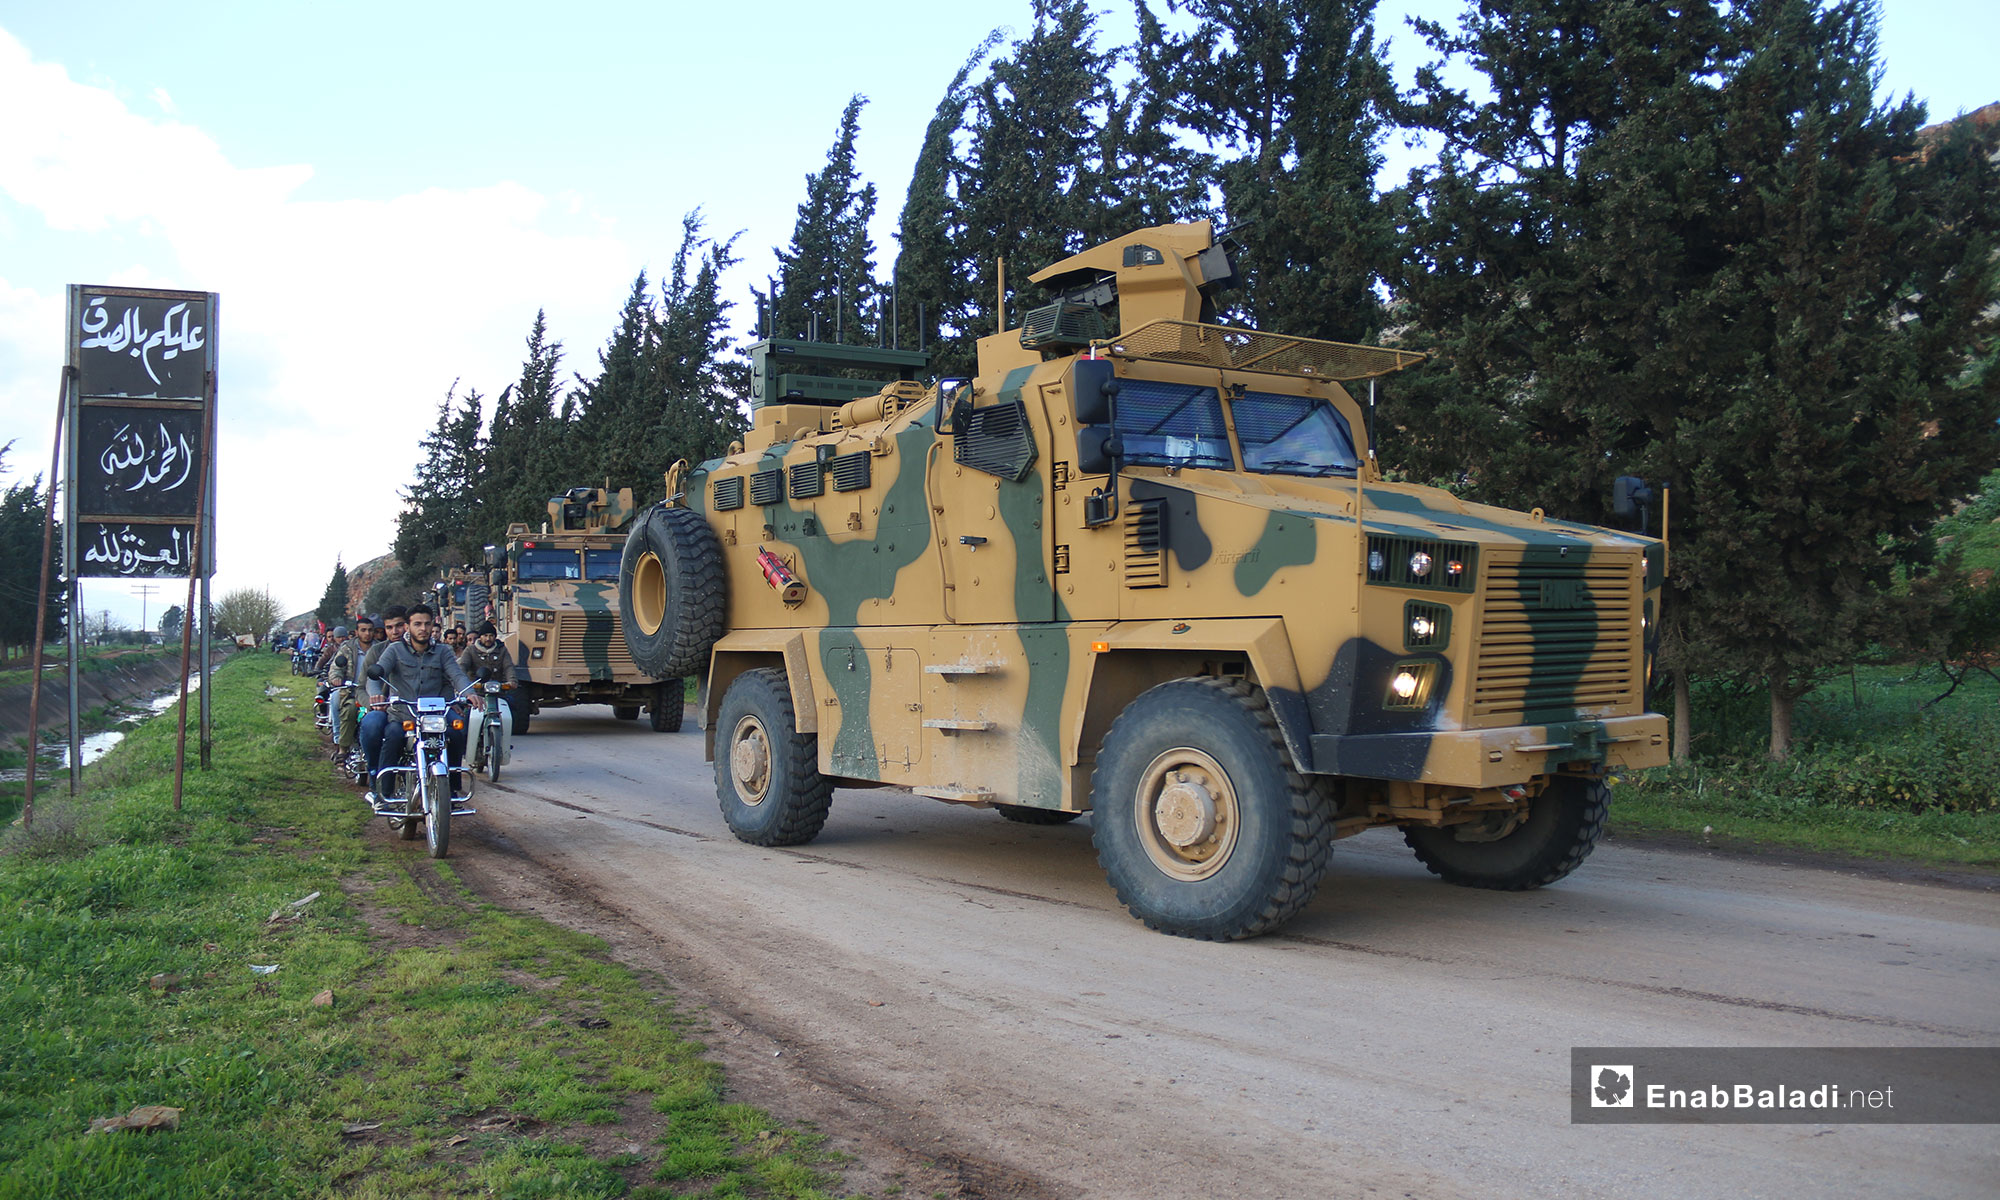 Turkish Army Patrol enters the demilitarized zone in rural Hama – March 18, 2019 (Enab Baladi)